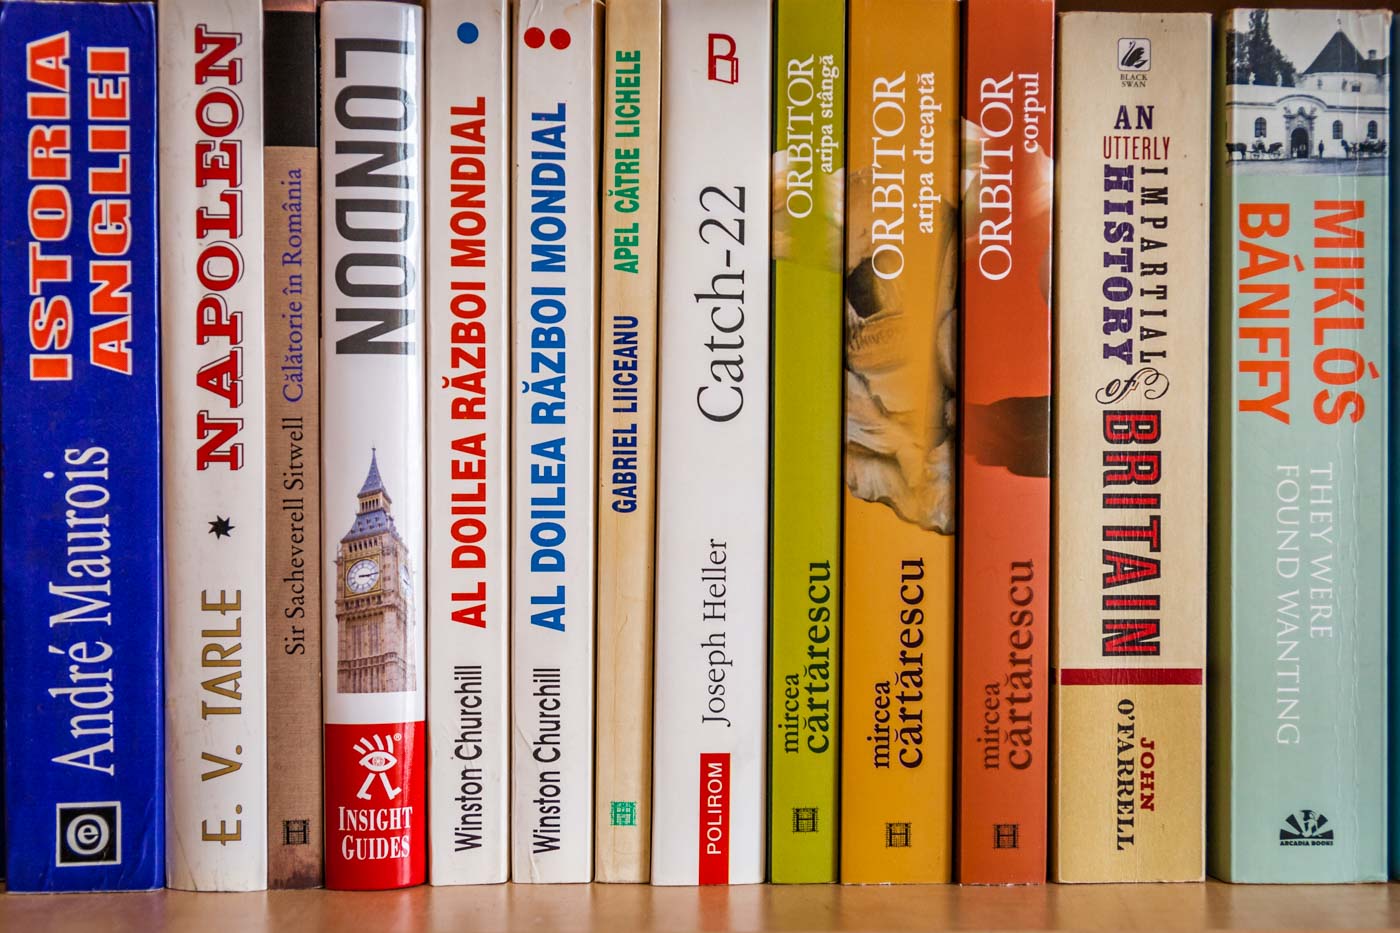 Books about Romania